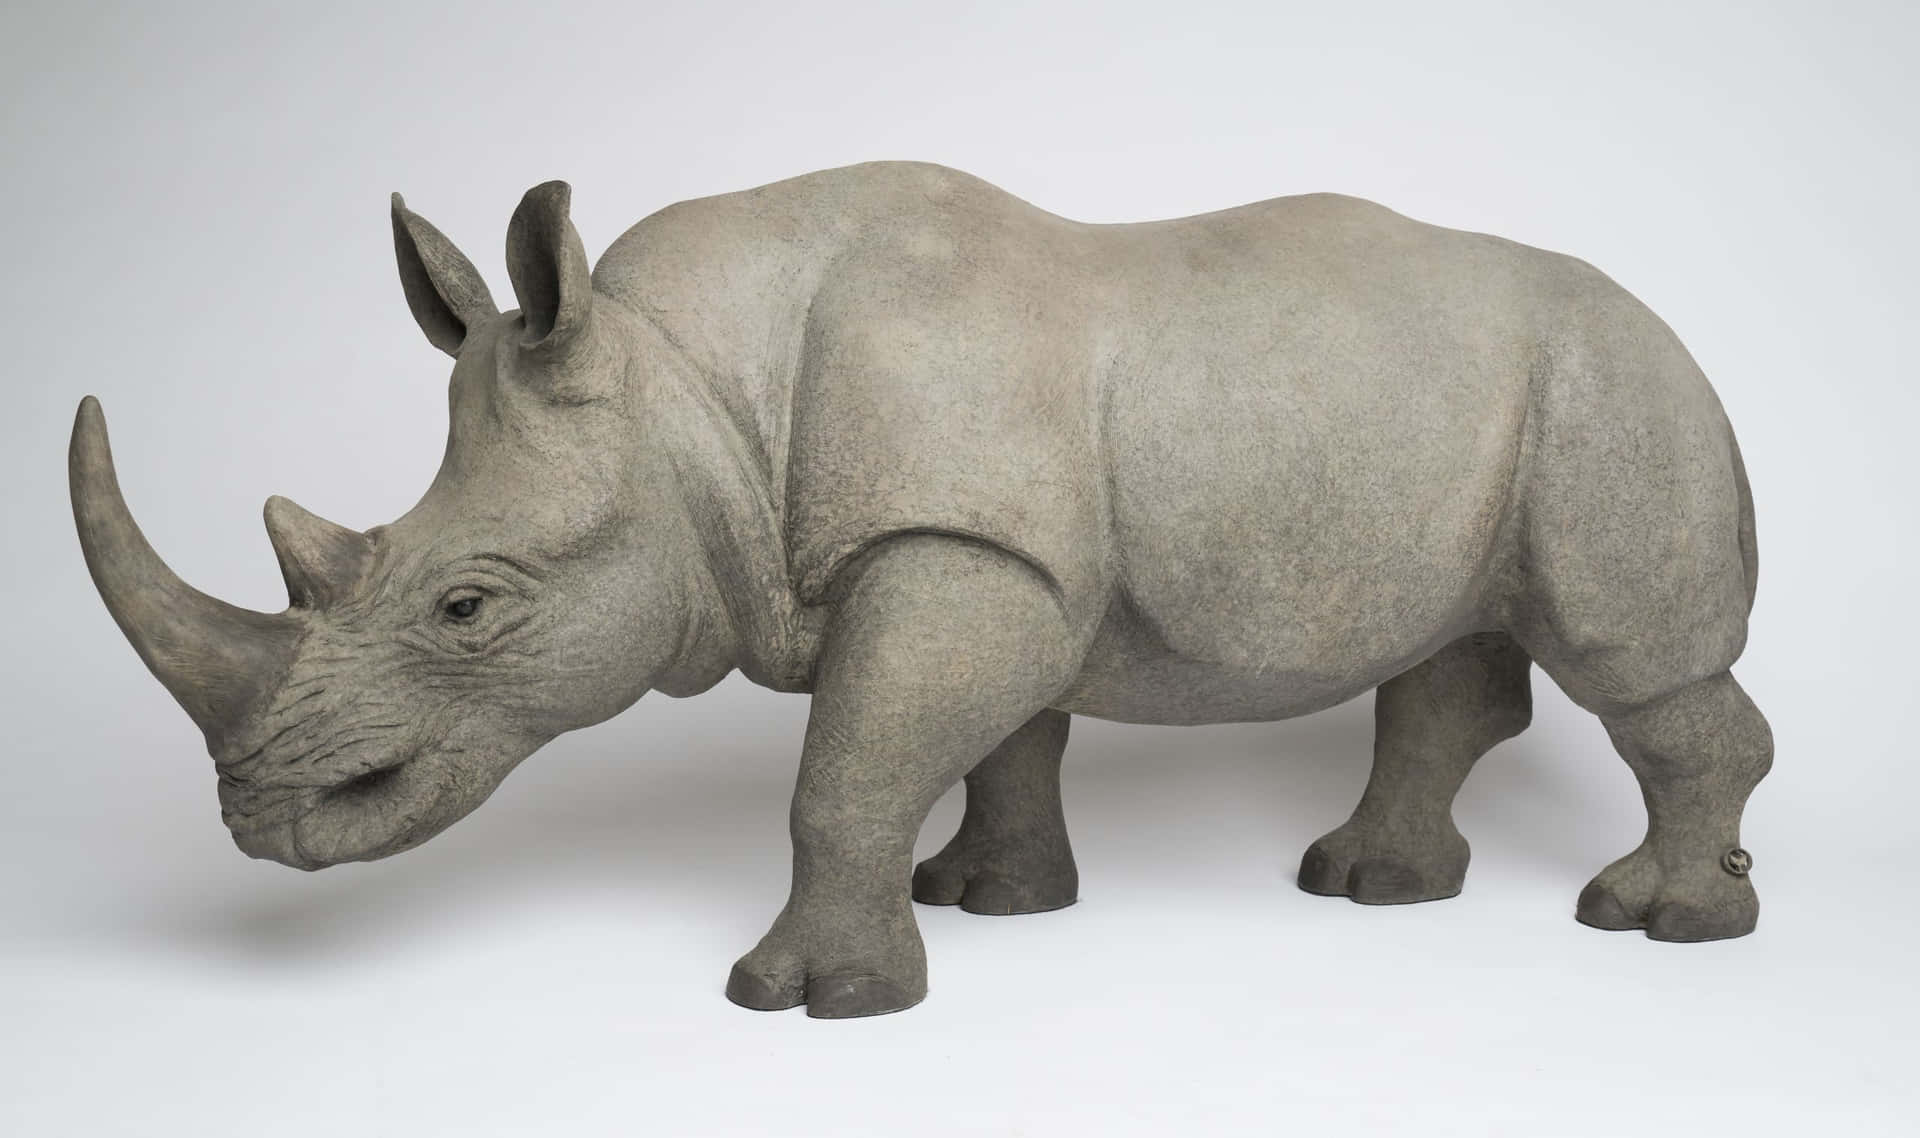 A Close-Up of a Rhinoceros